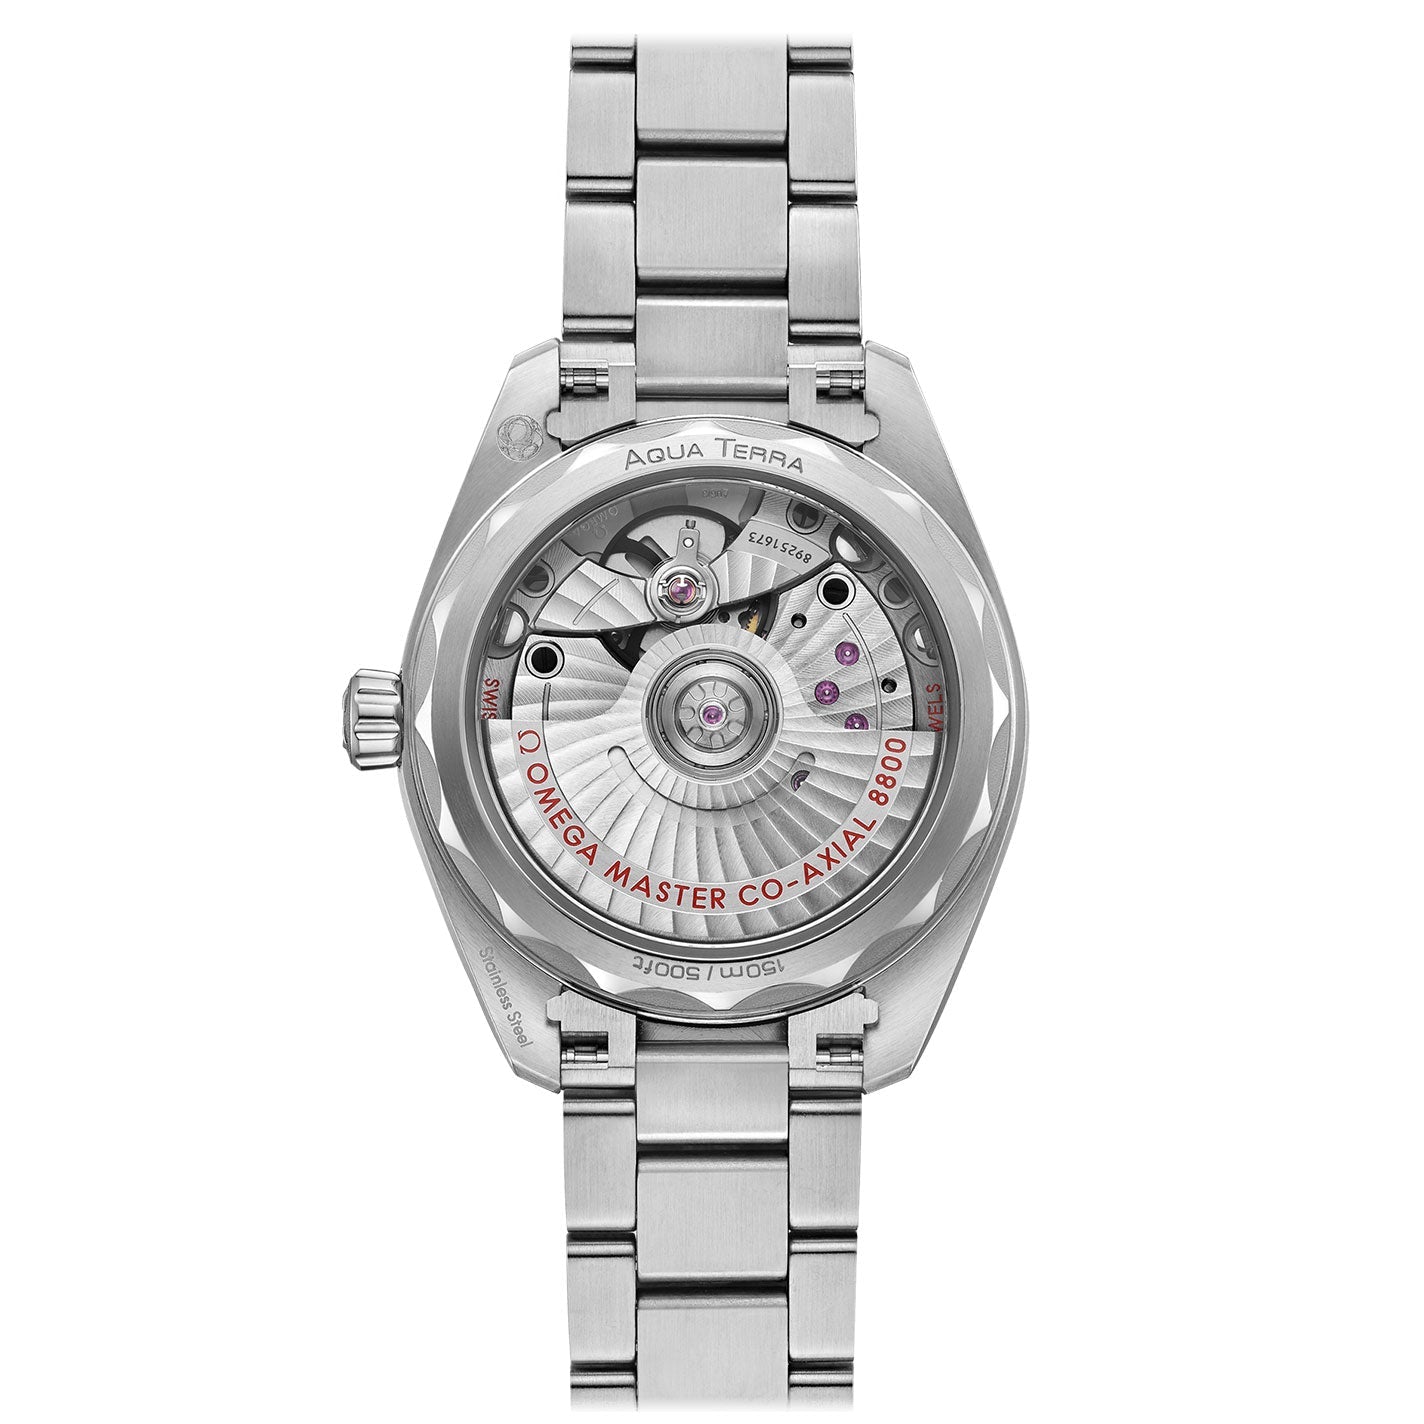 OMEGA Seamaster Aqua Terra 150M Co-Axial Master Chronometer 34mm Watch